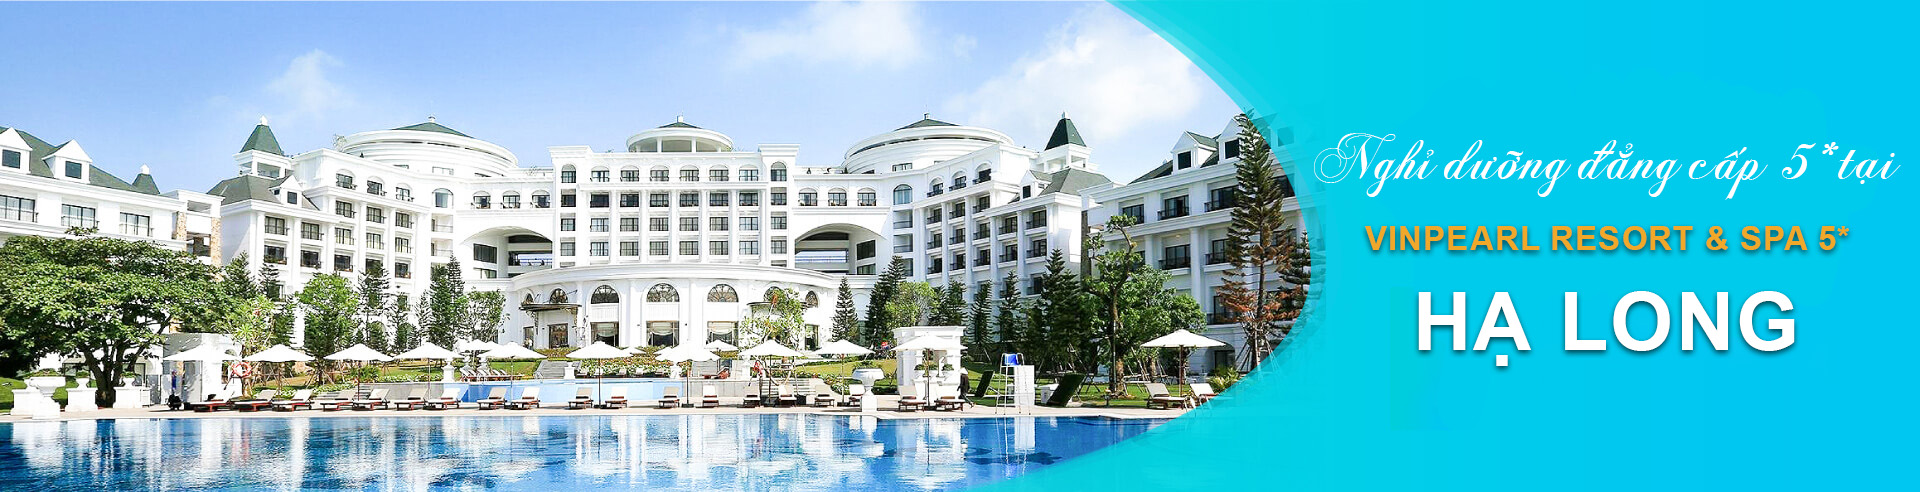 Hotel Destination: Vinpearl Hạ Long 